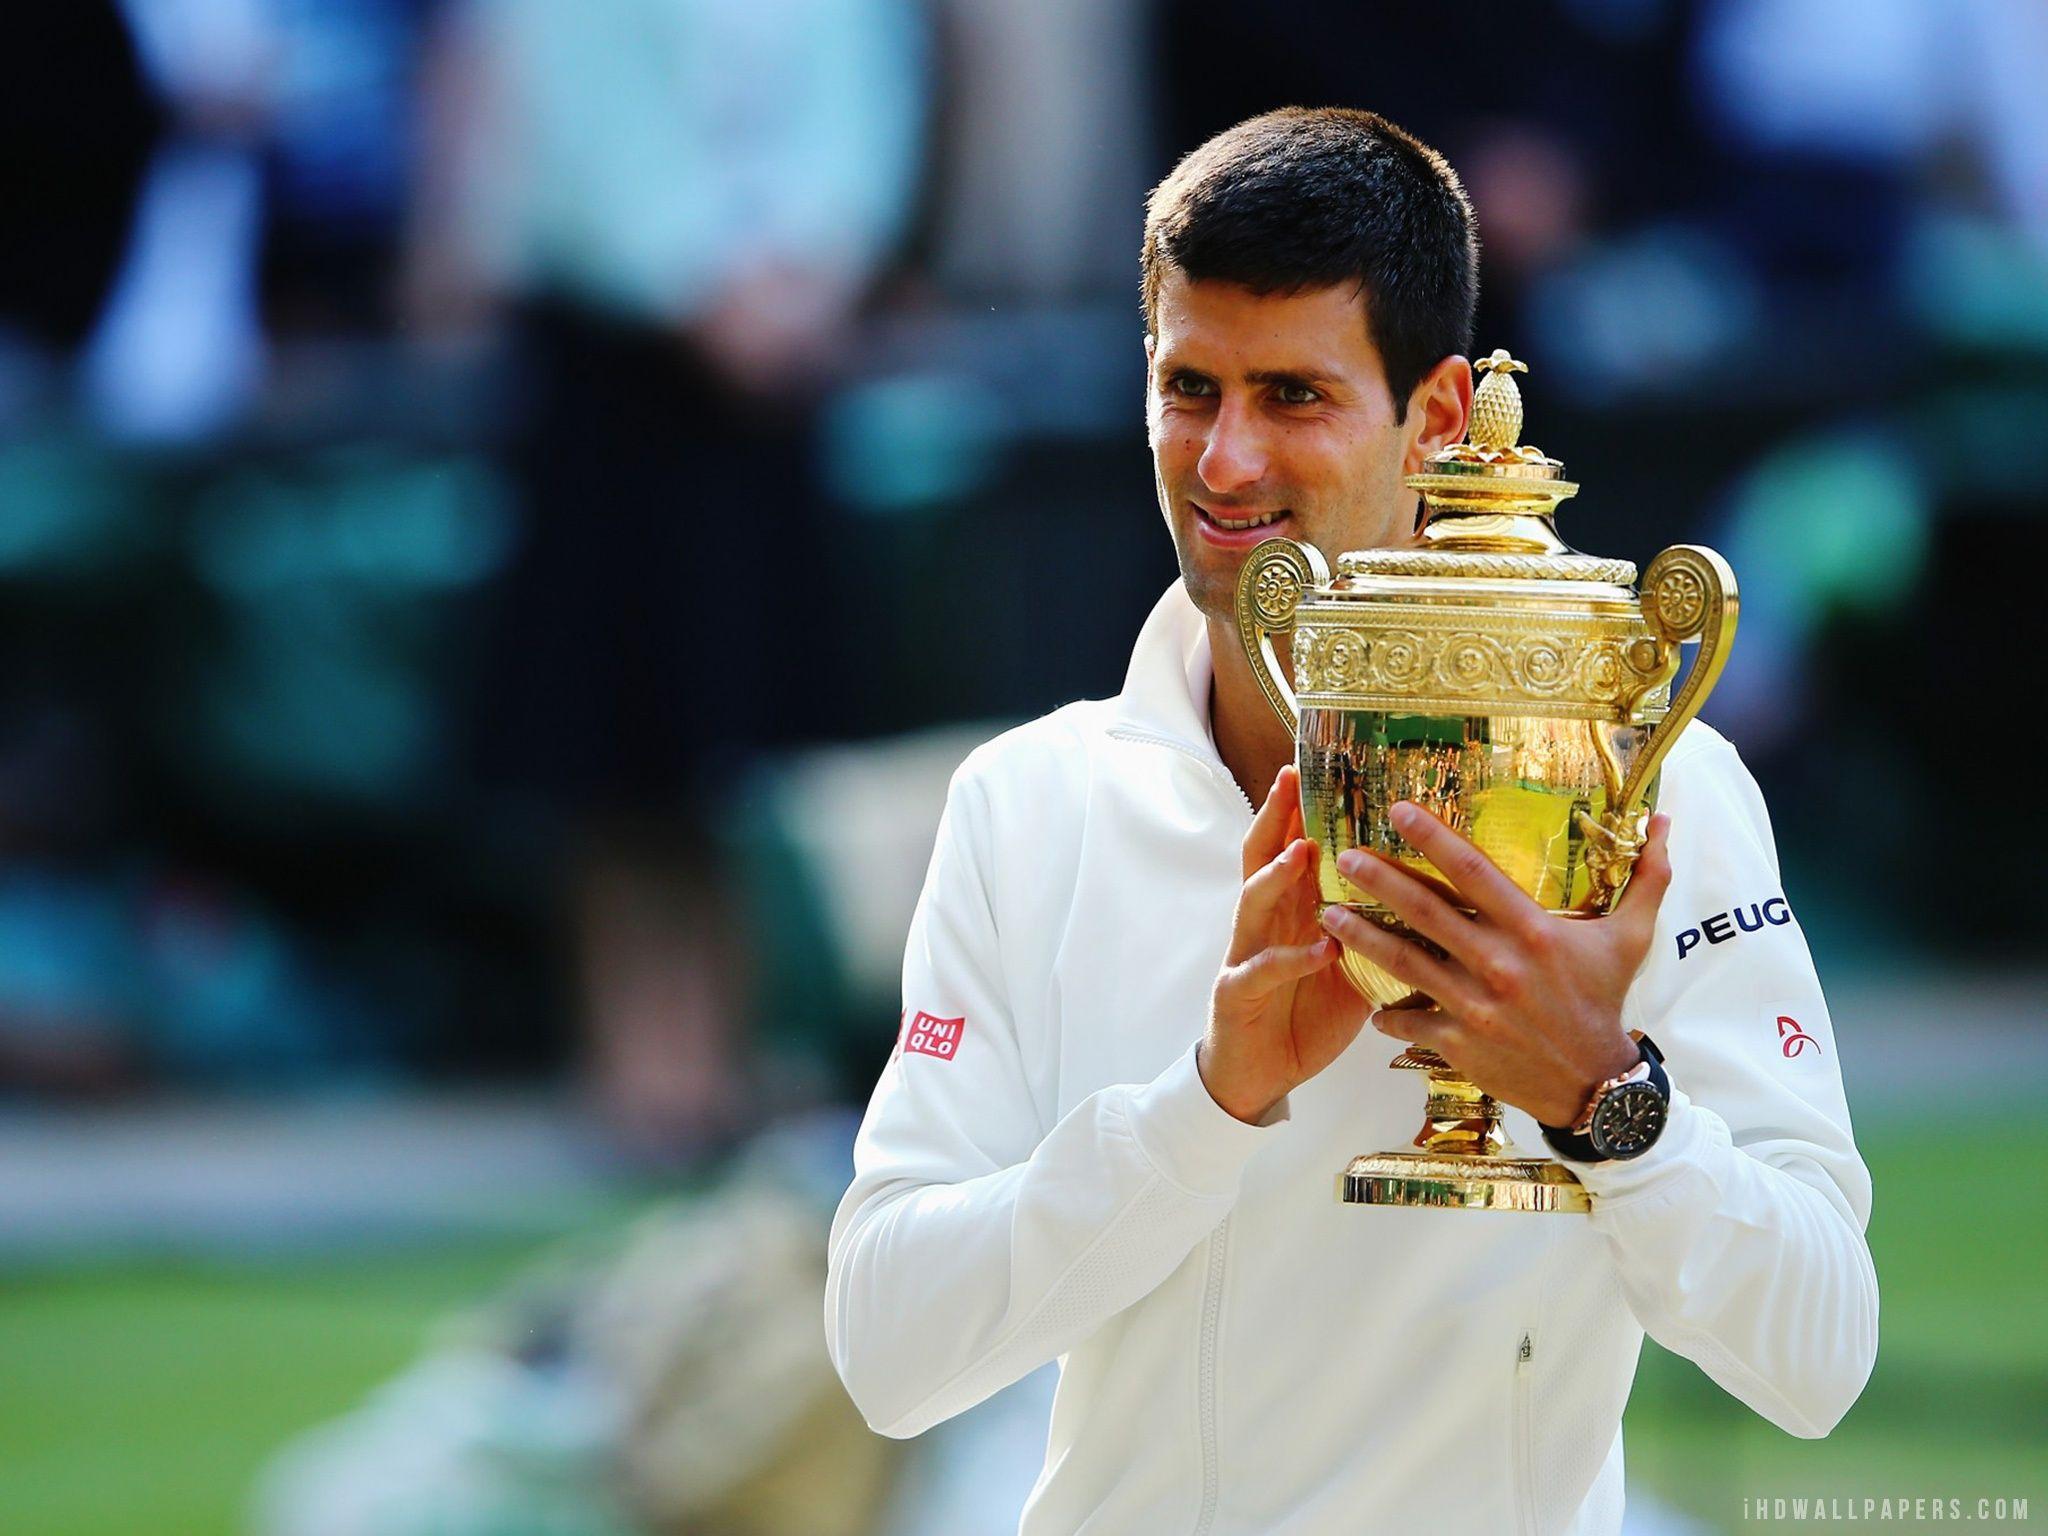 Novak Djokovic 2014 Wimbledon Winner wallpaper. sports. Wallpaper